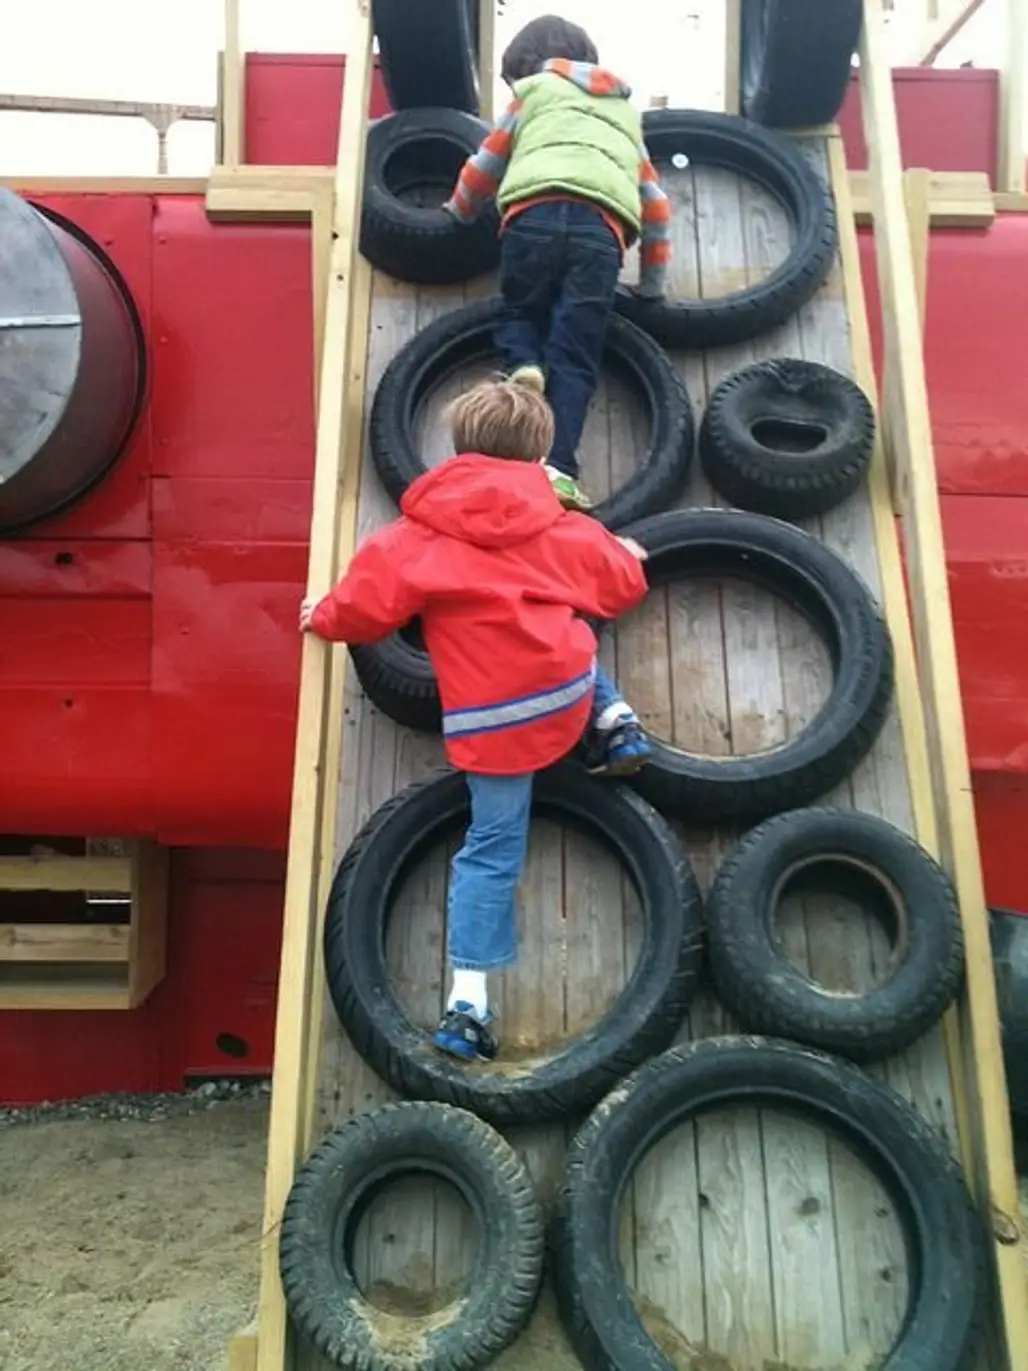 Build the Kids a Tire Climber